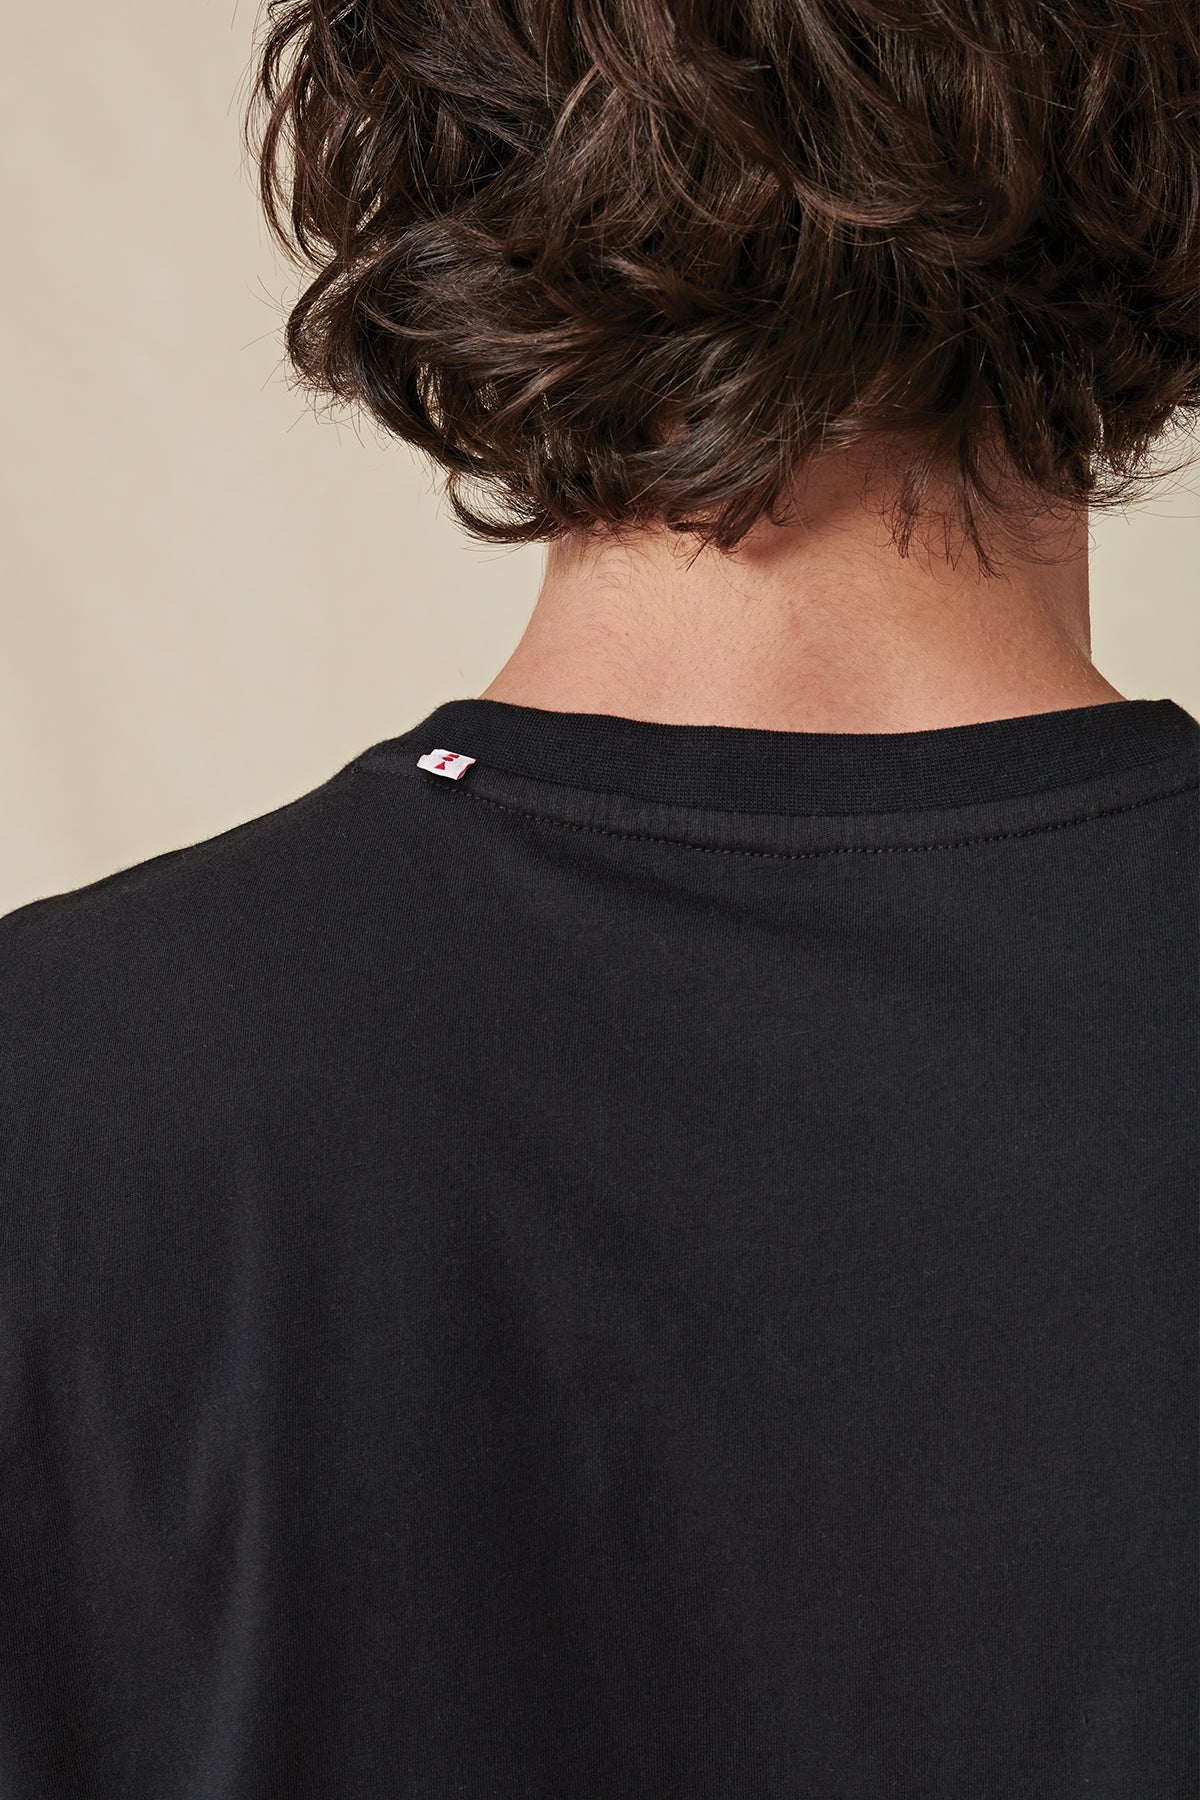 back collar view of Black Globe Brand tee